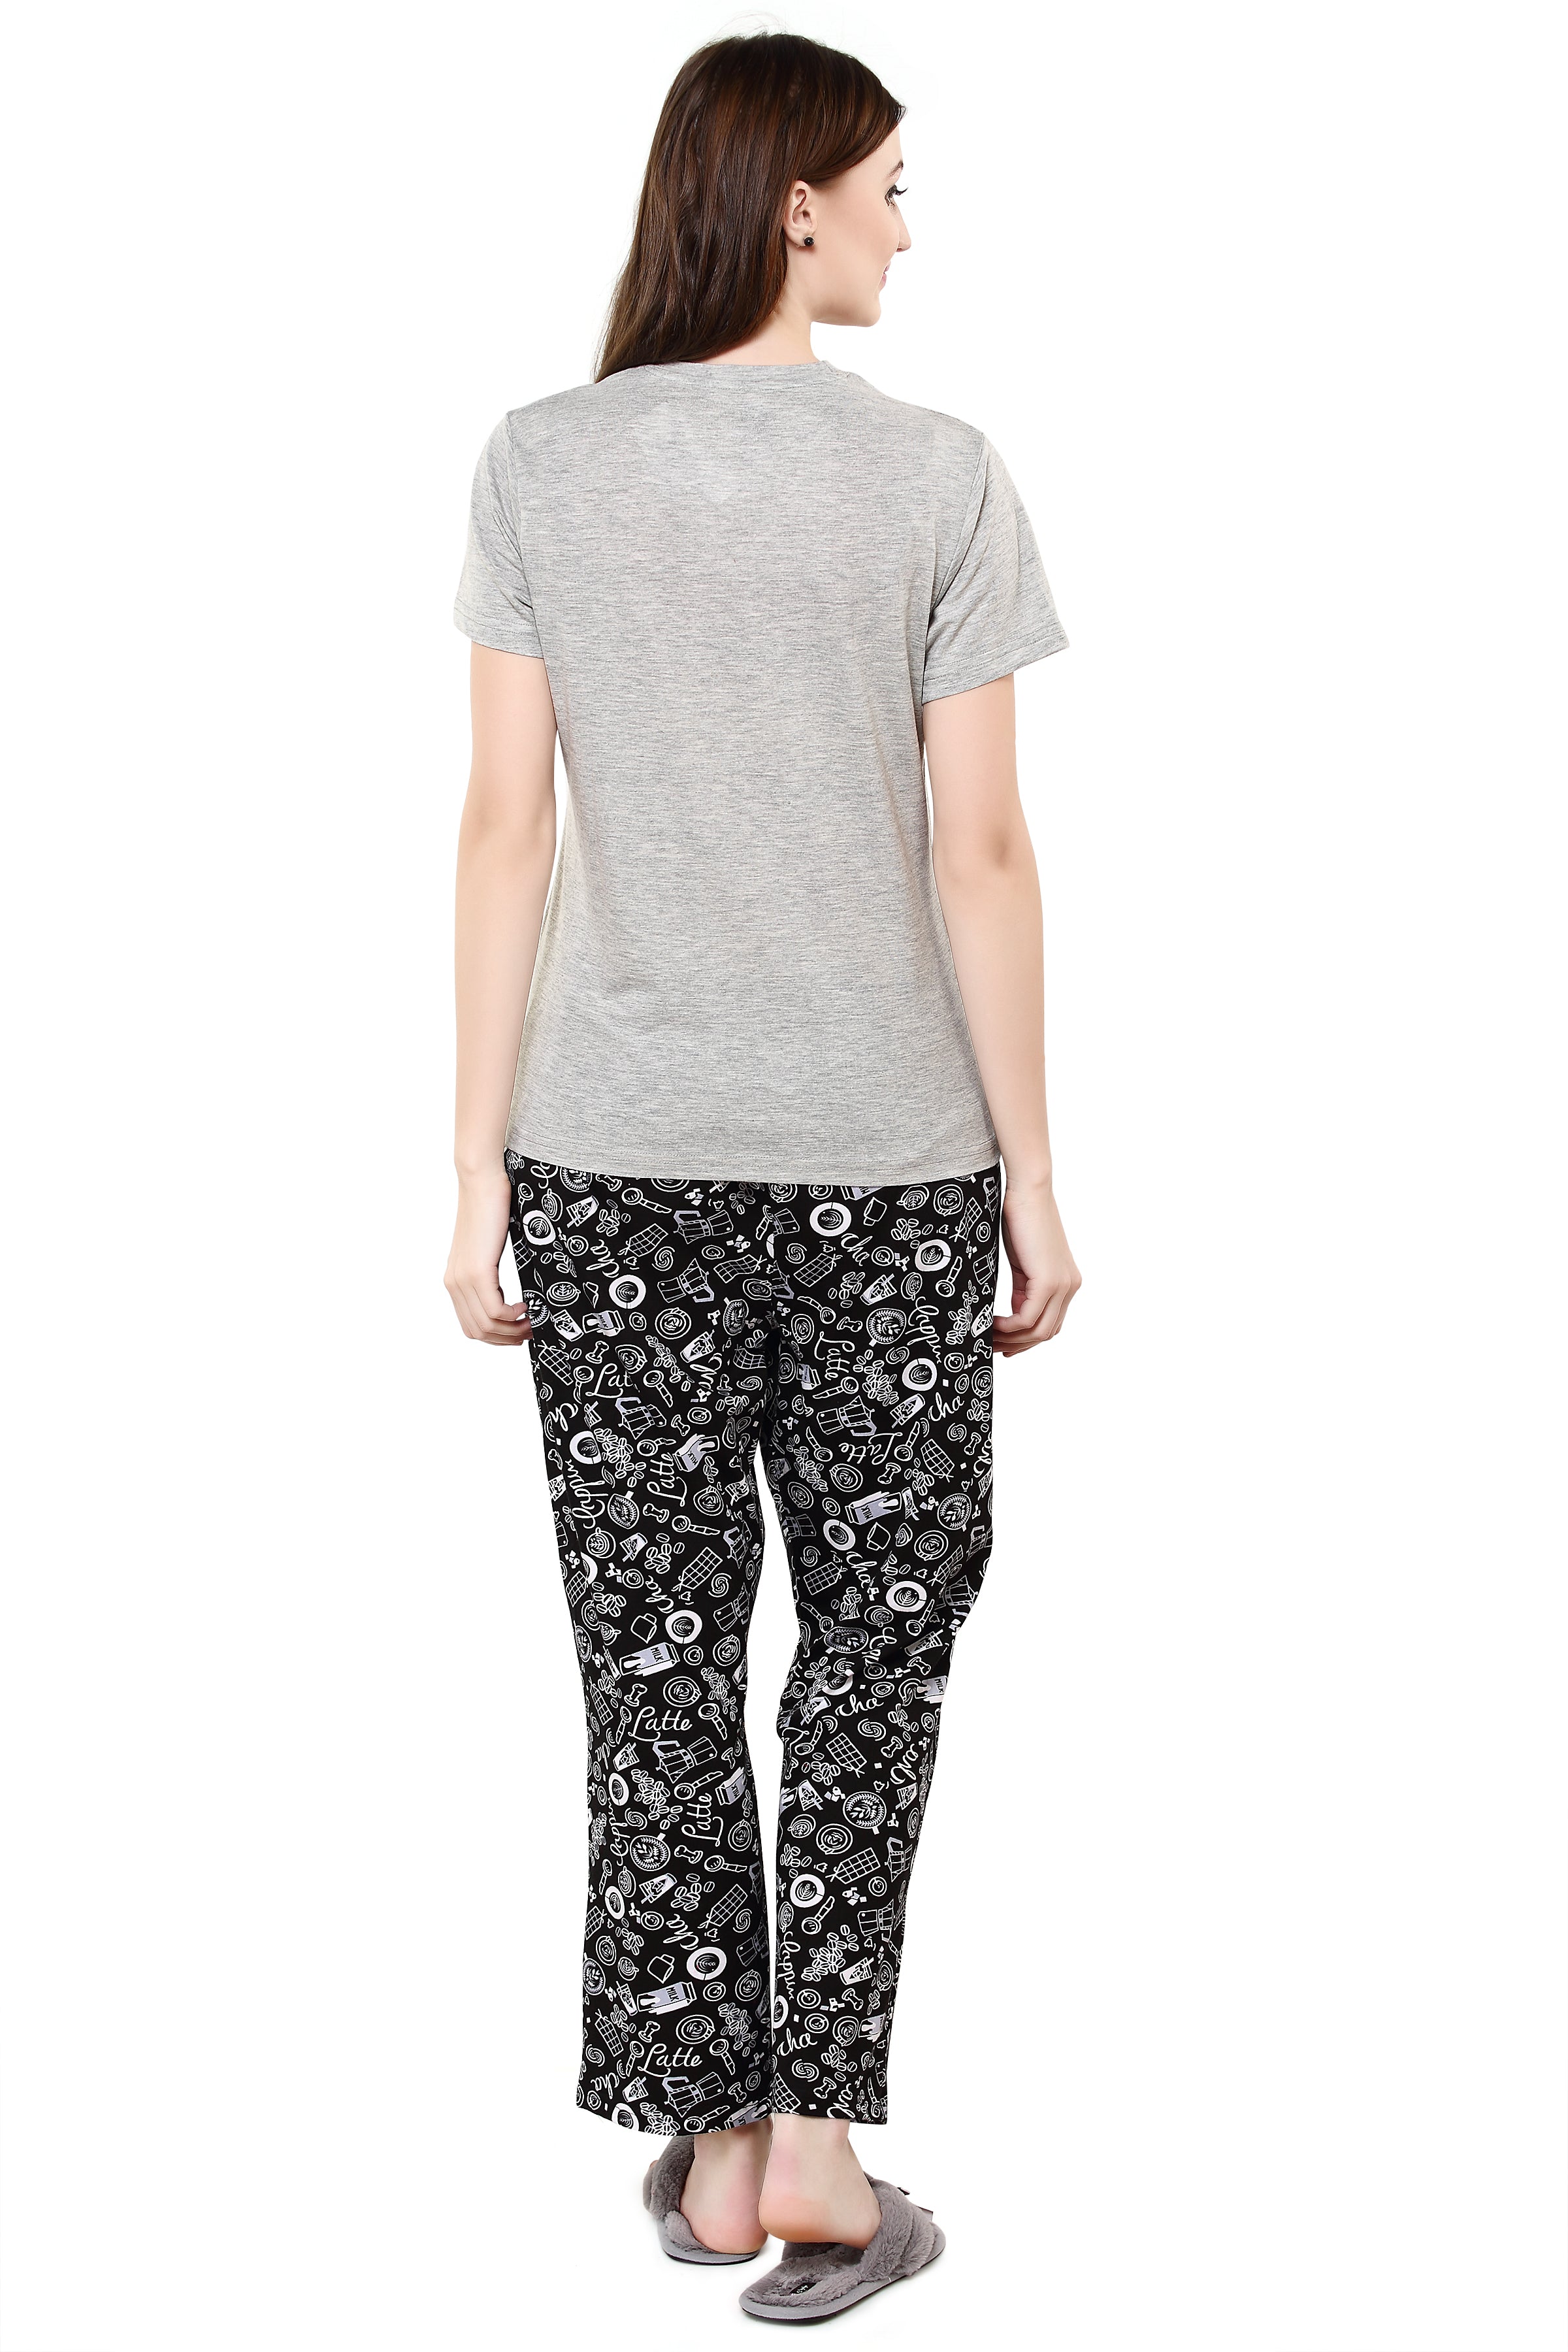 Evolove Women's Goat Grey Round Neck I love Coffee Printed Pajama Set (Goat Grey & Black, S)